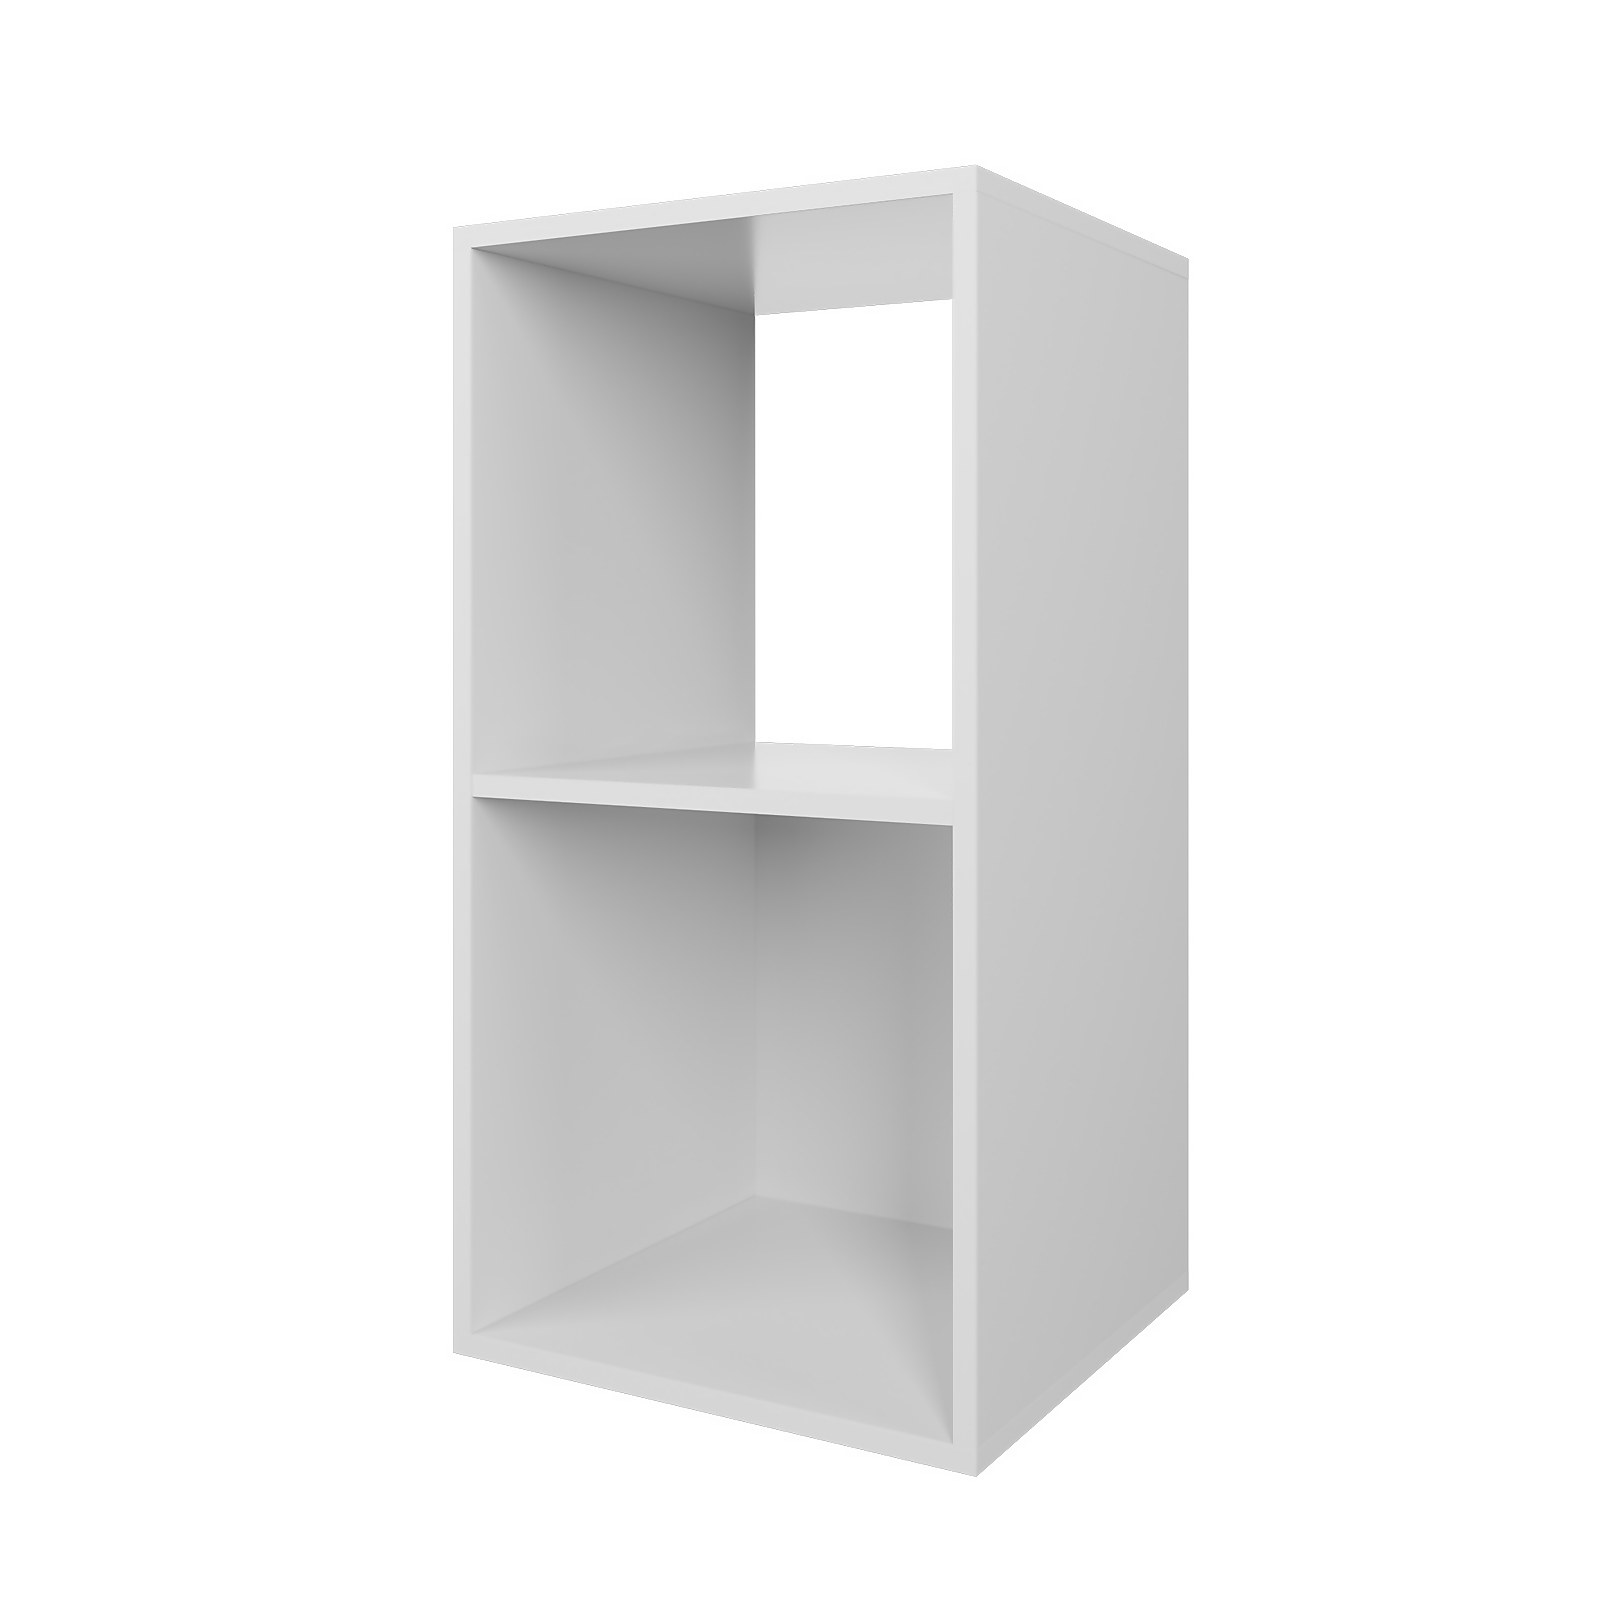 Photo of Compact Cube 2x1 Storage Unit - White